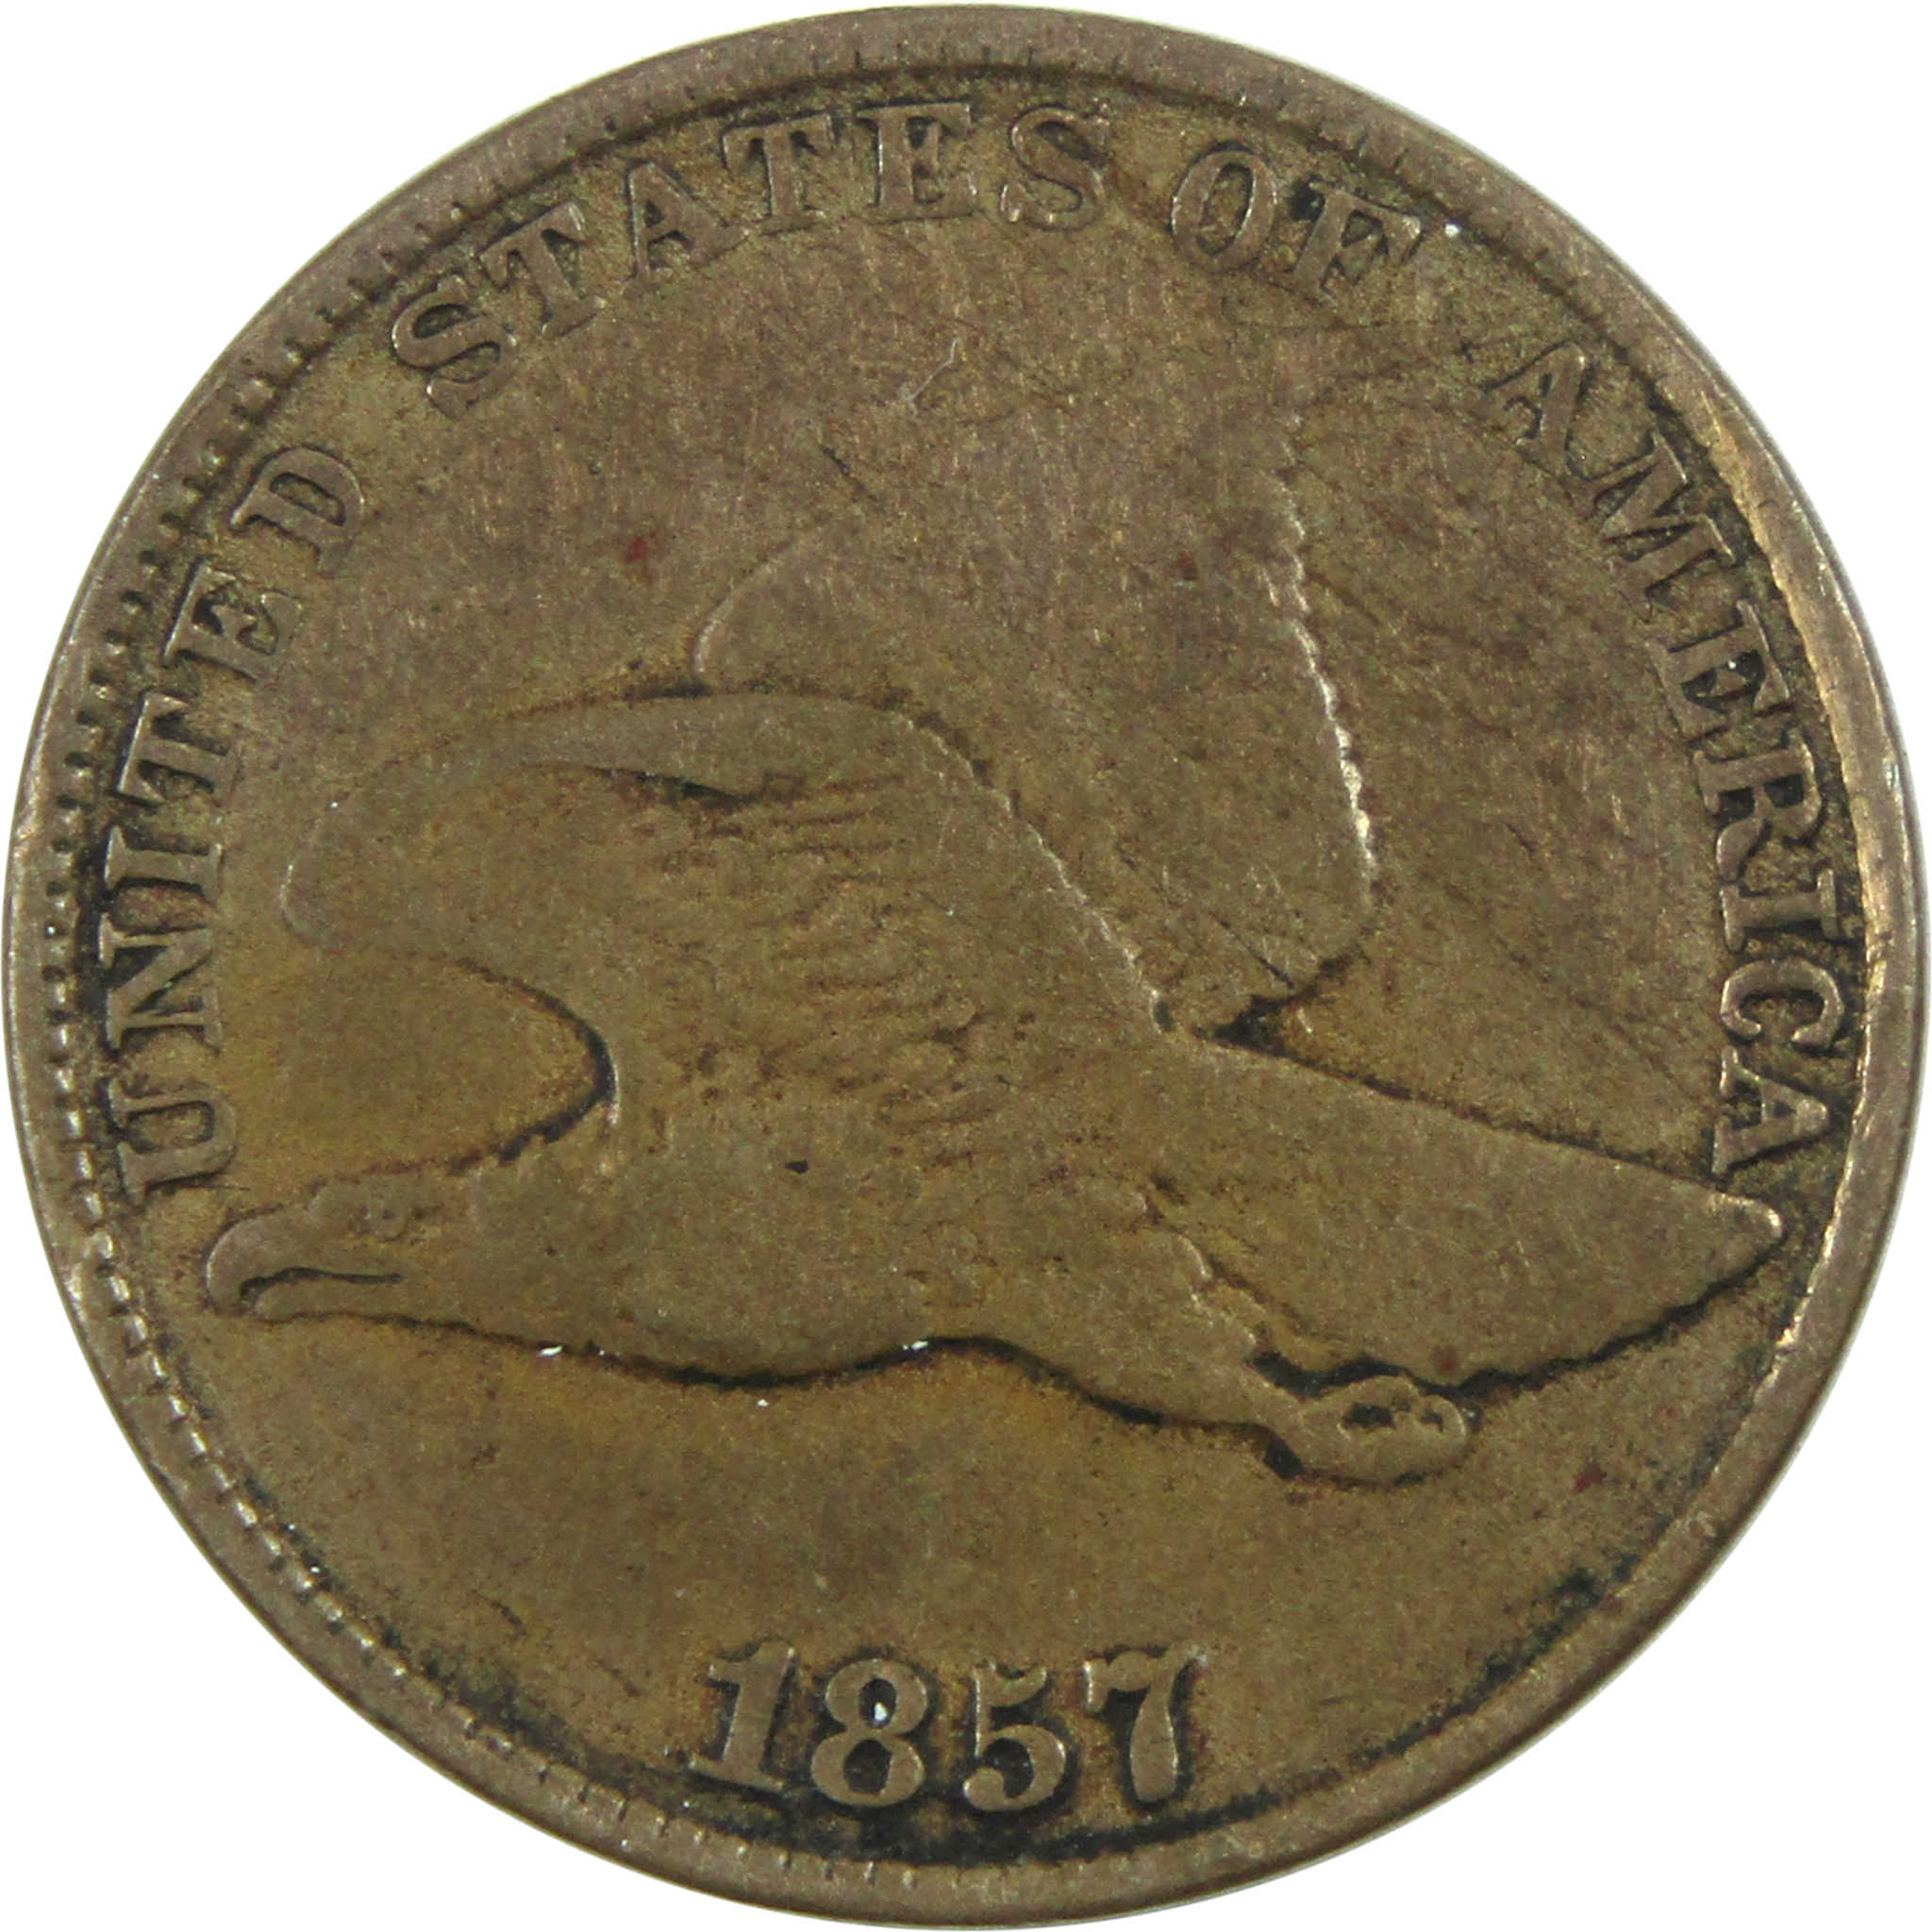 1857 Flying Eagle Cent VG Very Good Copper-Nickel SKU:I13338